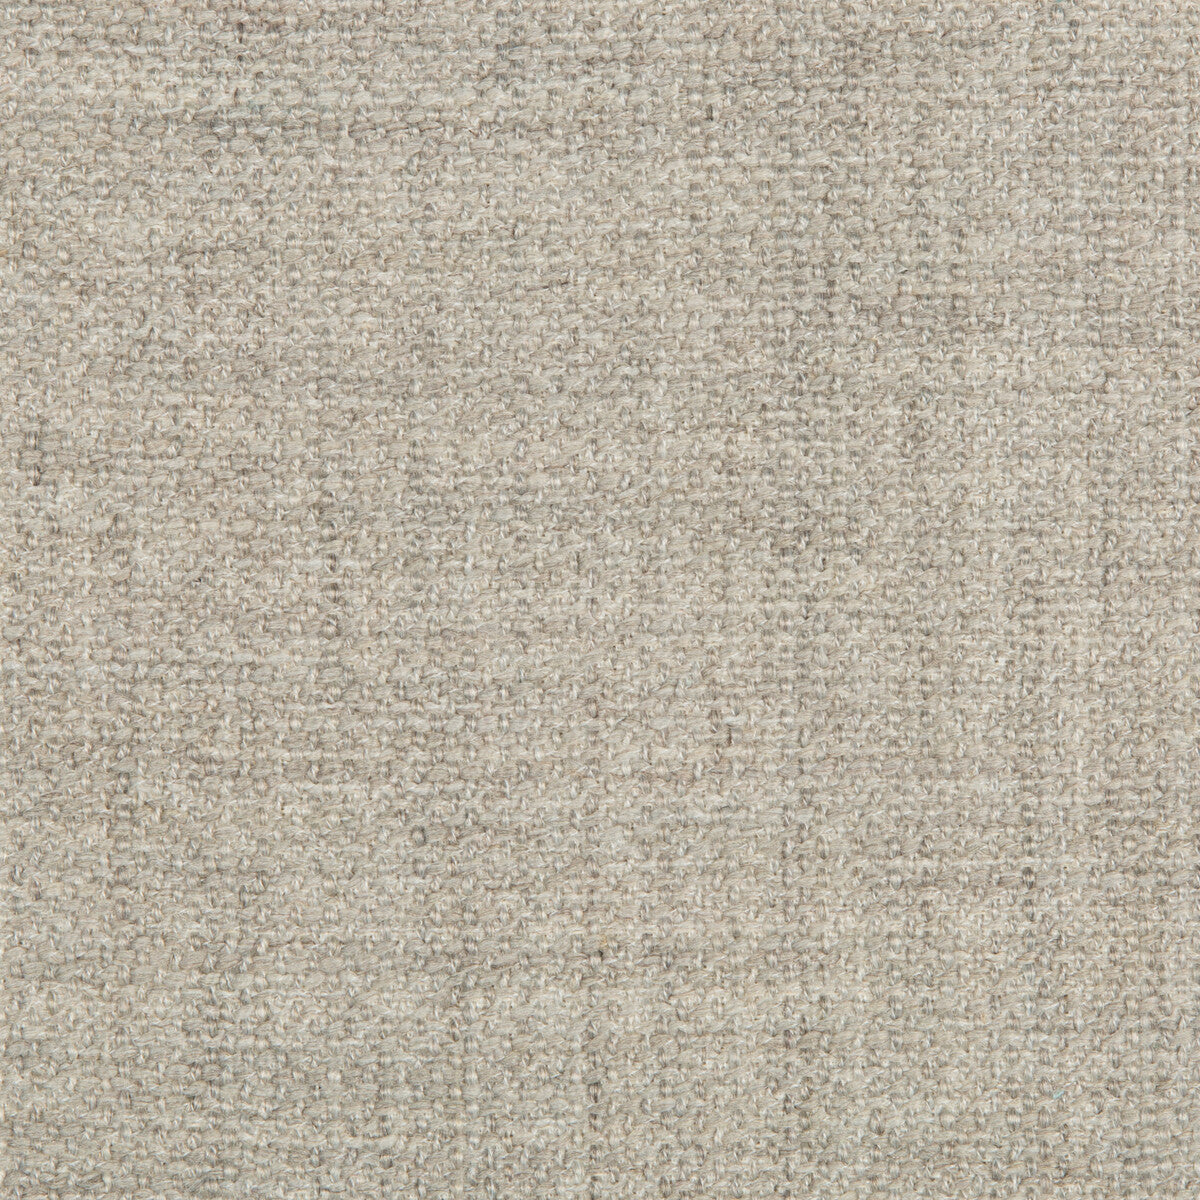 Kravet Smart fabric in 35379-1101 color - pattern 35379.1101.0 - by Kravet Smart in the Performance Kravetarmor collection